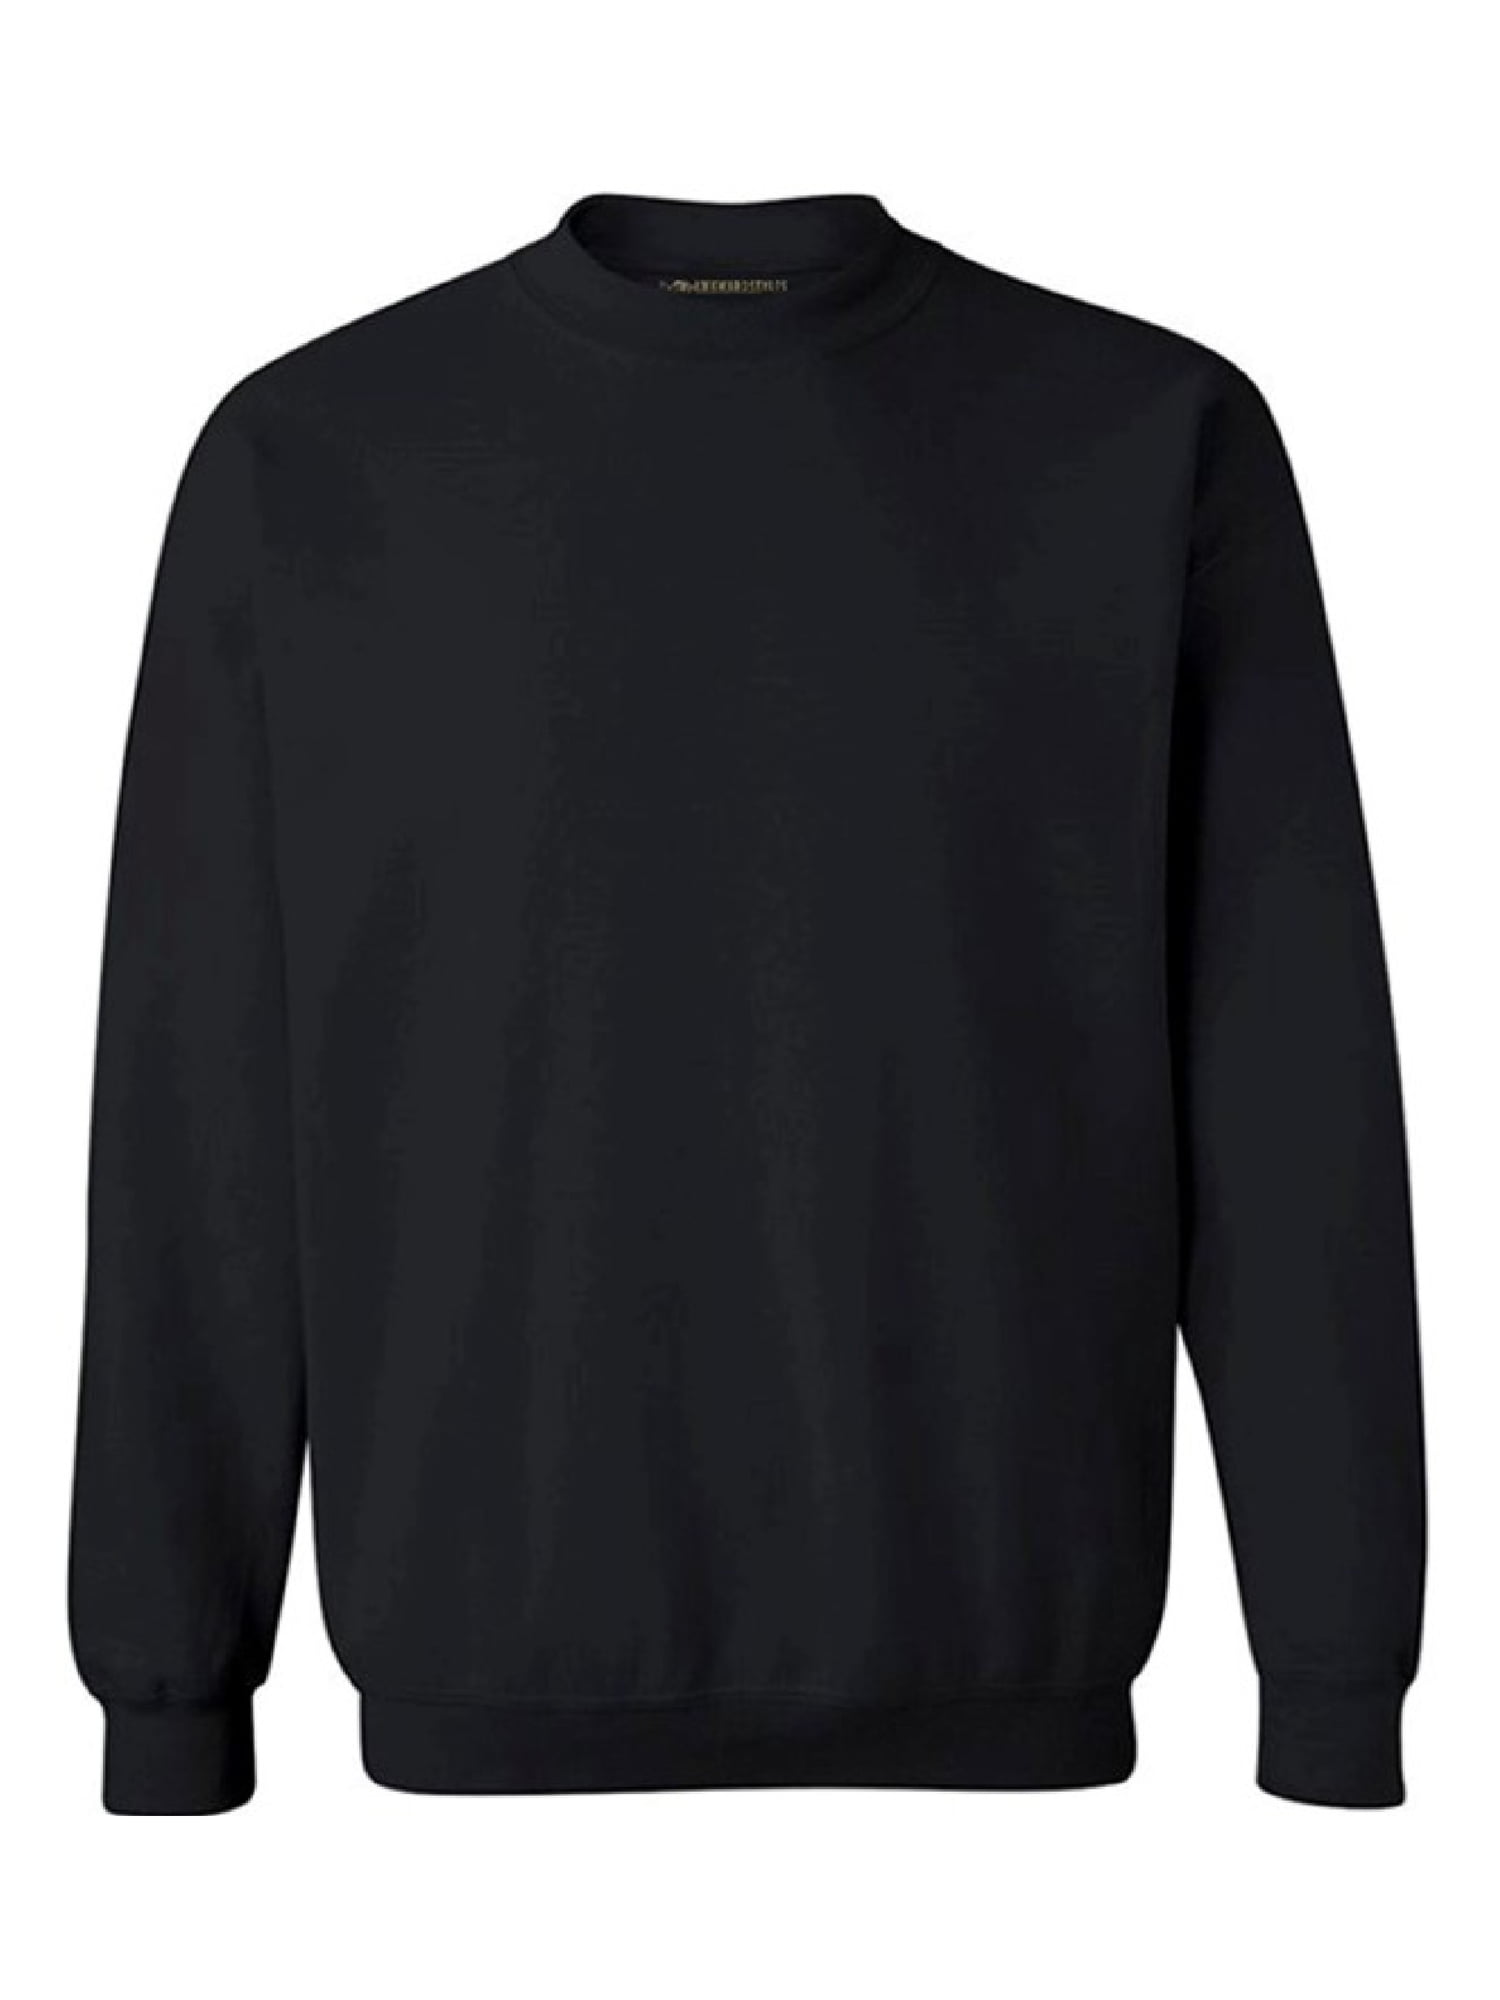 Details about   James & Nicholson Mens Casual Cotton Basic Sweatshirt Long Sleeve Top Crew Neck 